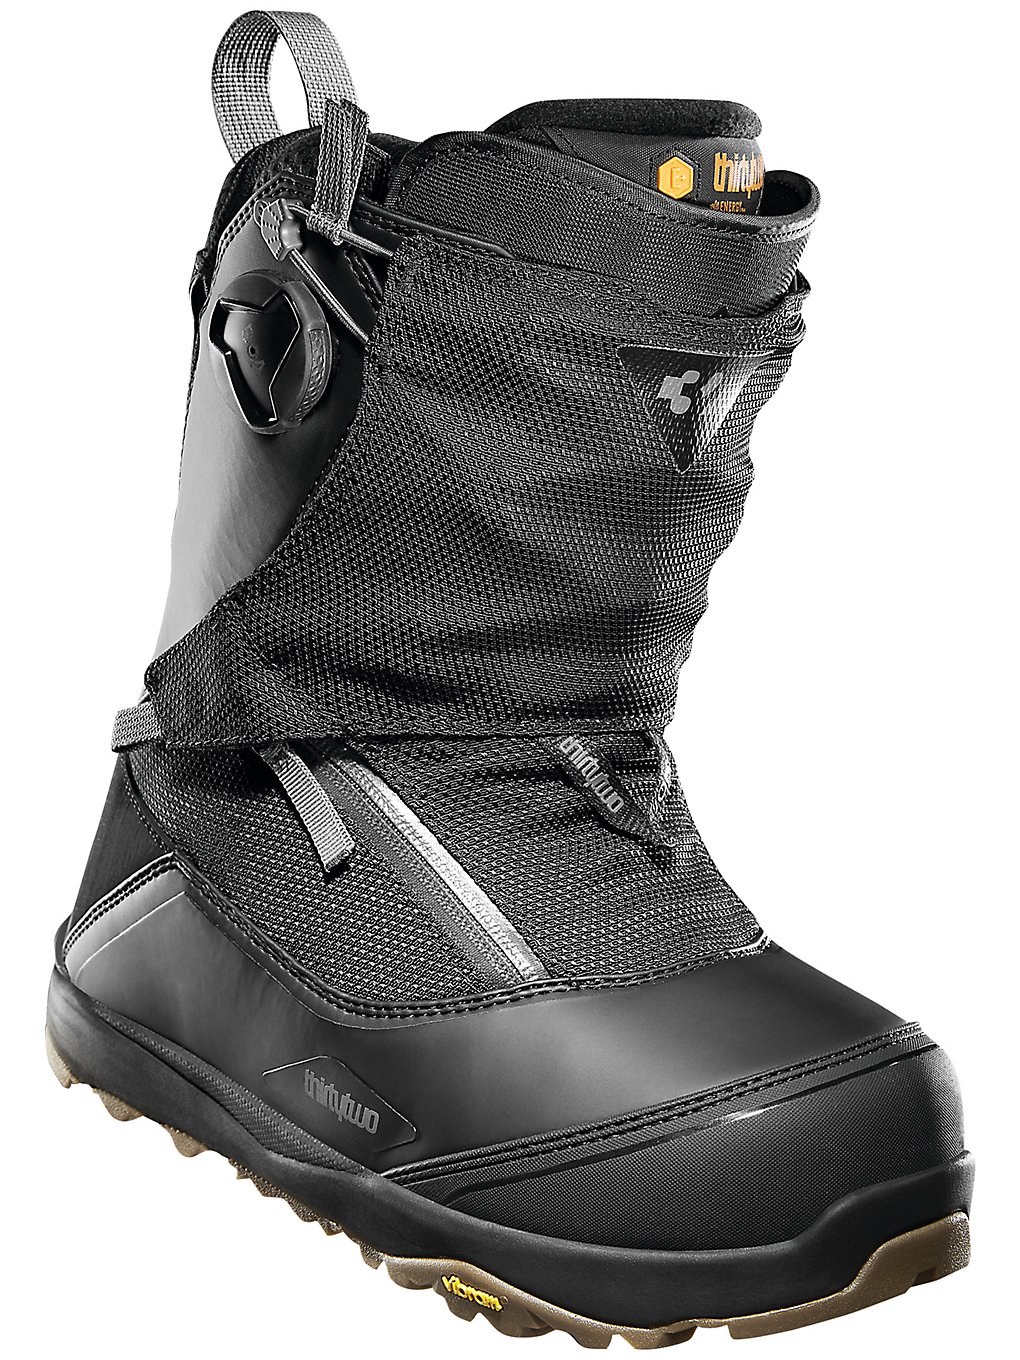 ThirtyTwo Jones MTB 2022 Snowboard Boots gum